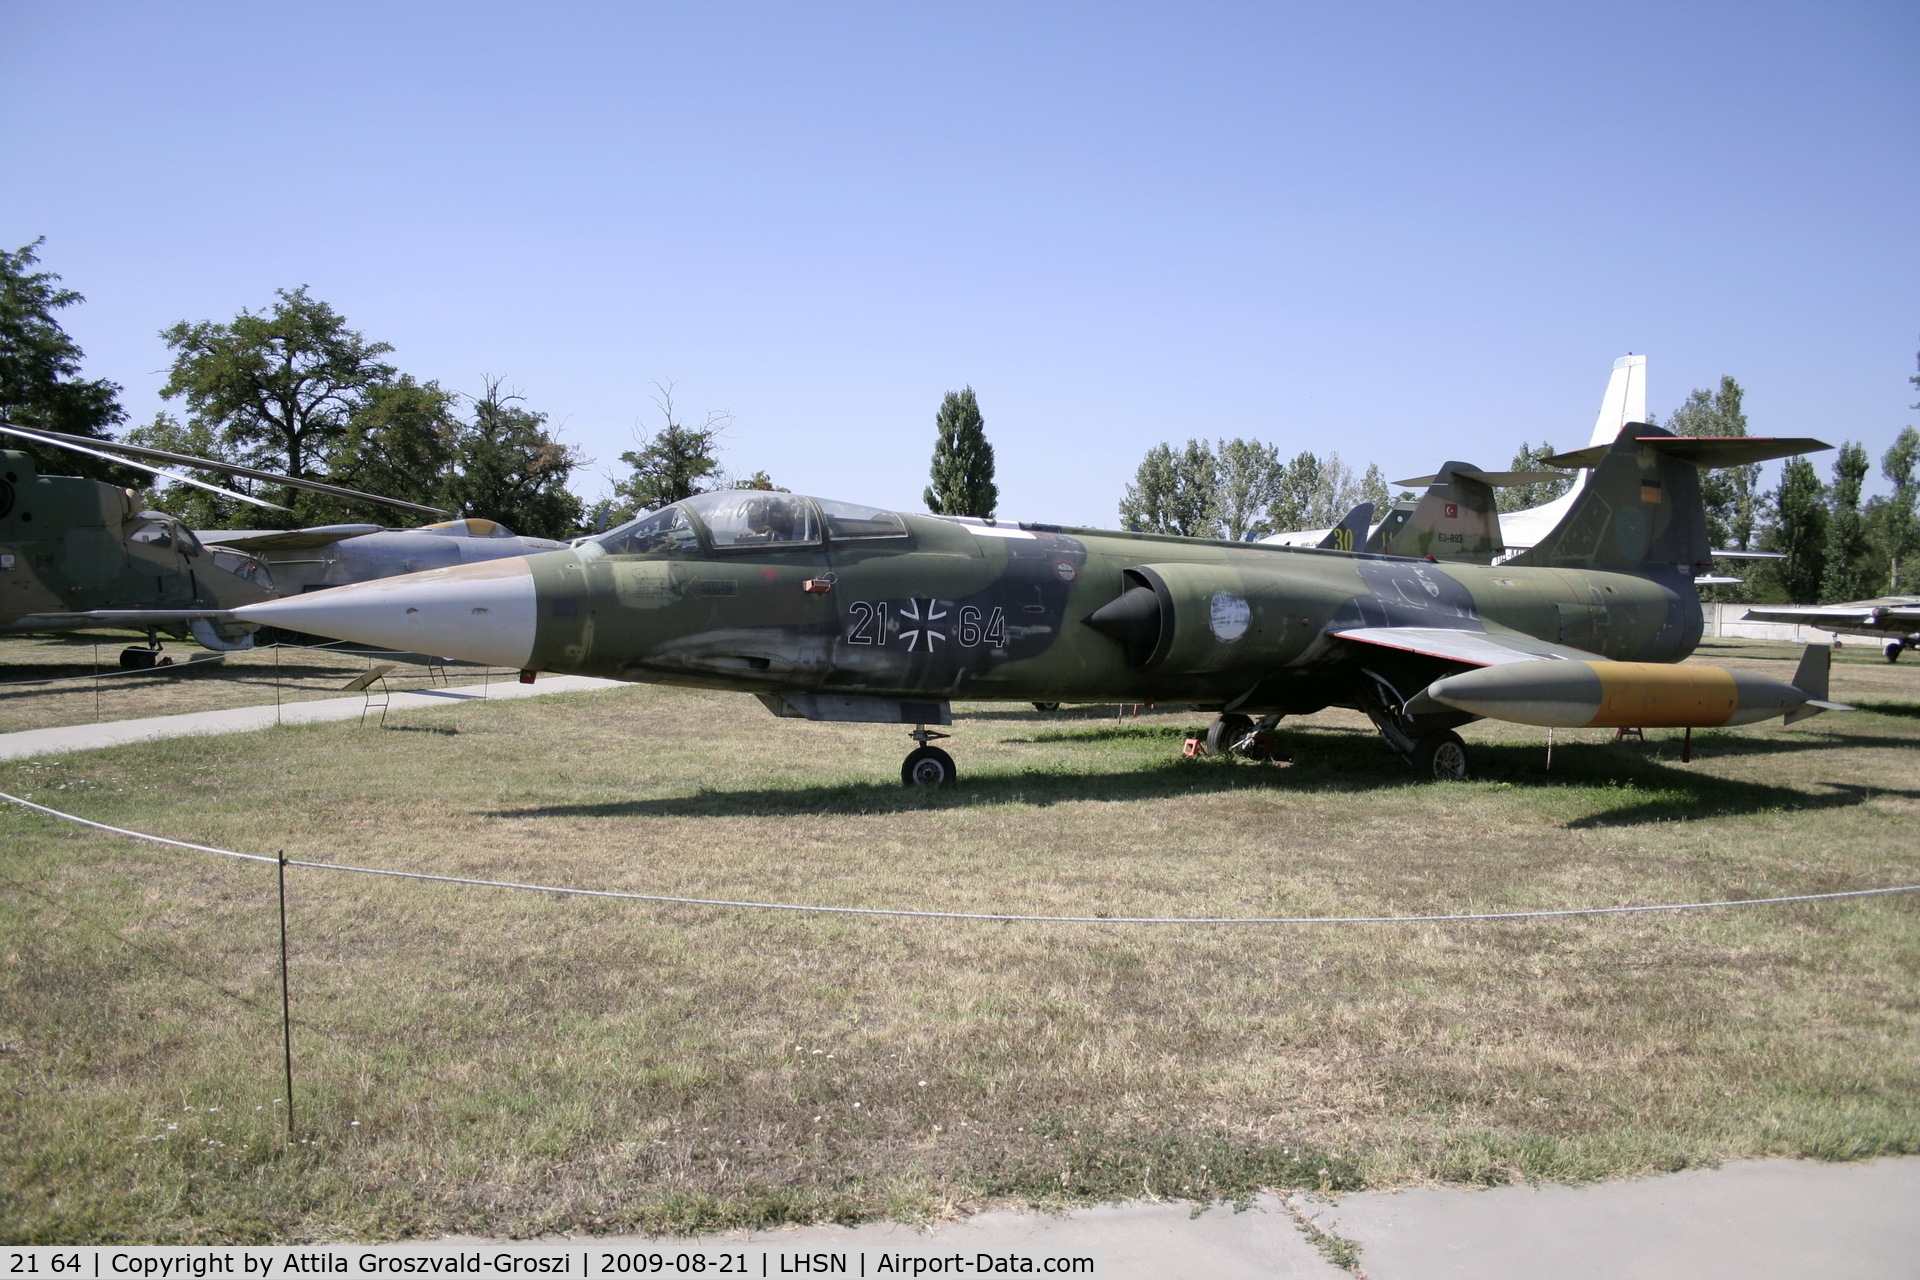 21 64, 1963 Lockheed F-104G Starfighter C/N 683-7033, Szolnok-Szandaszölös airplane museum.